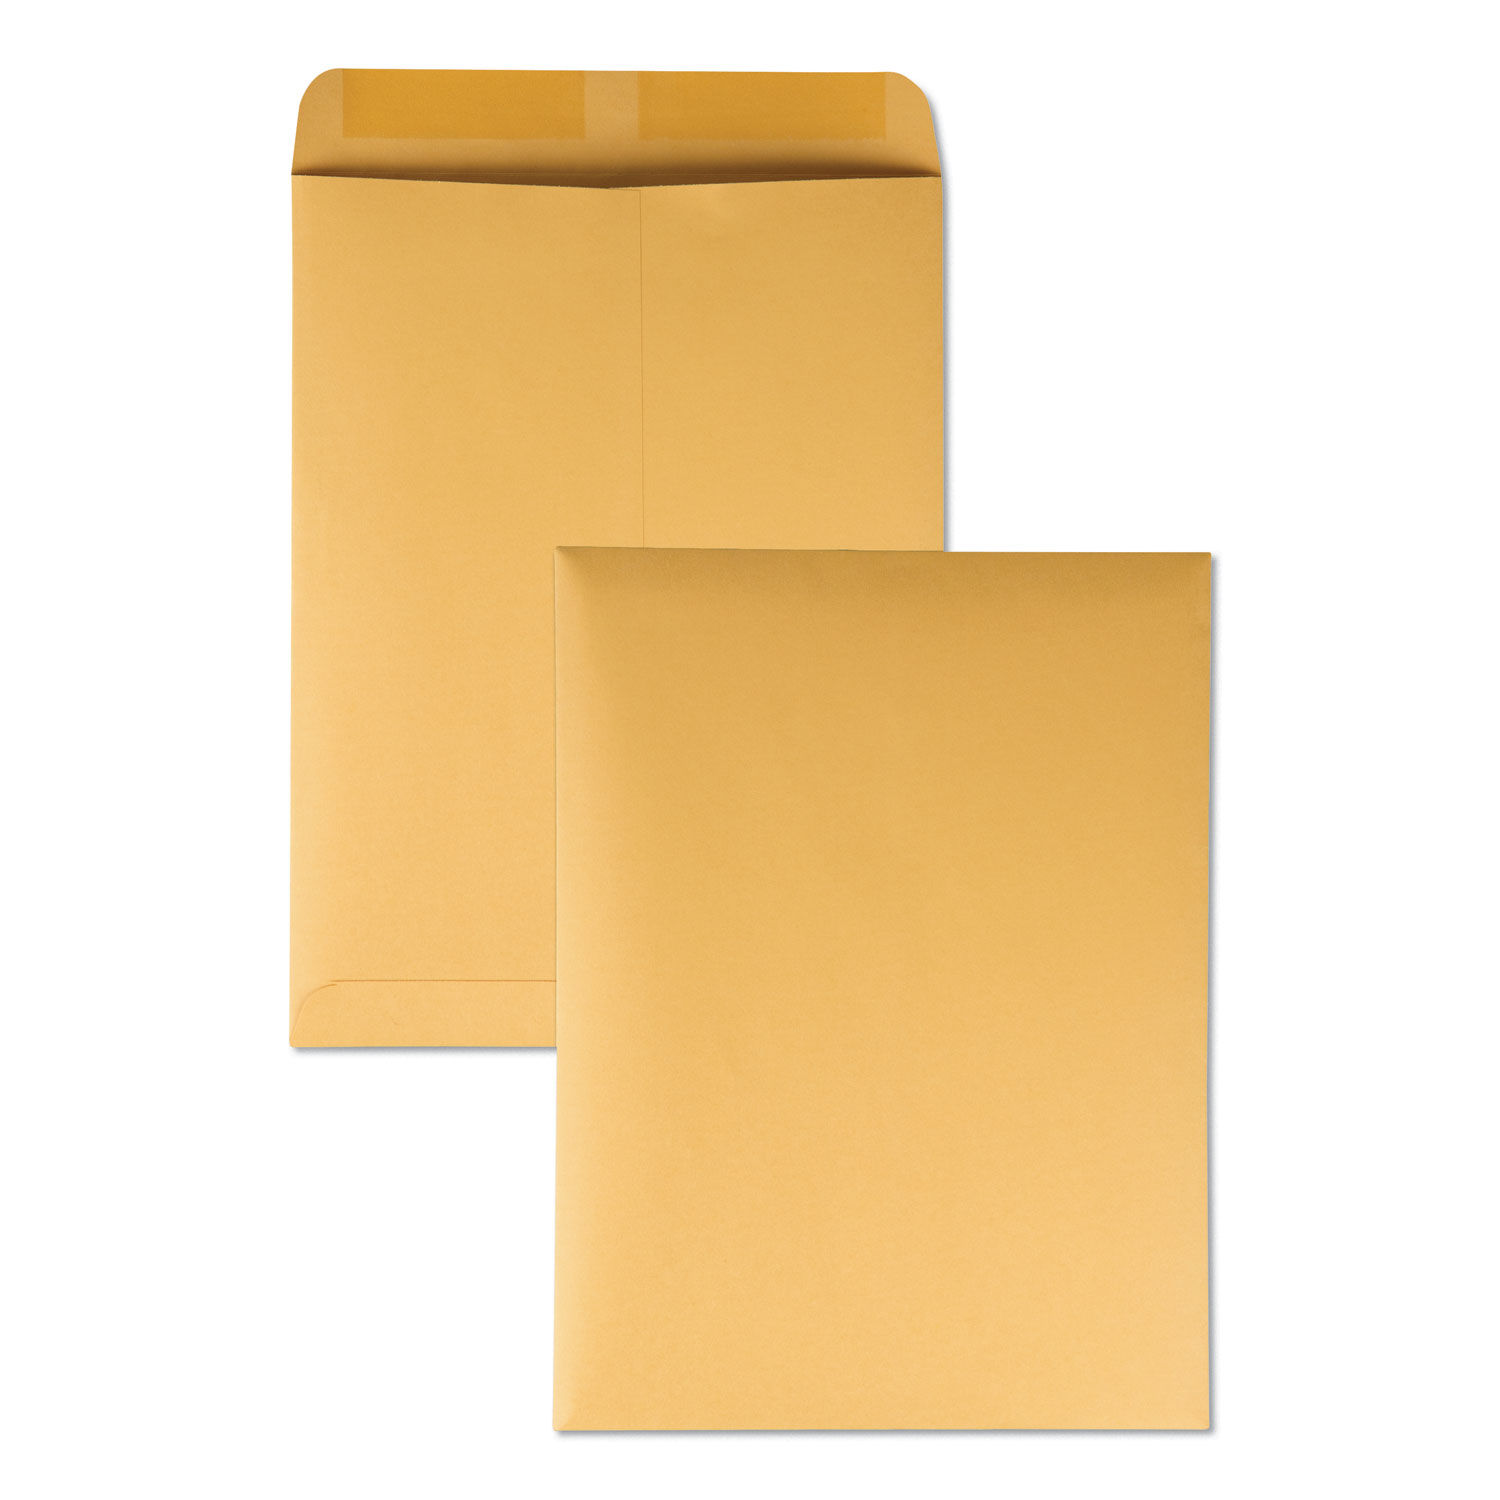 Catalog Envelope 28 lb Bond Weight Kraft, #12 1/2, Square Flap, Gummed Closure, 9.5 x 12.5, Brown Kraft, 250/Box